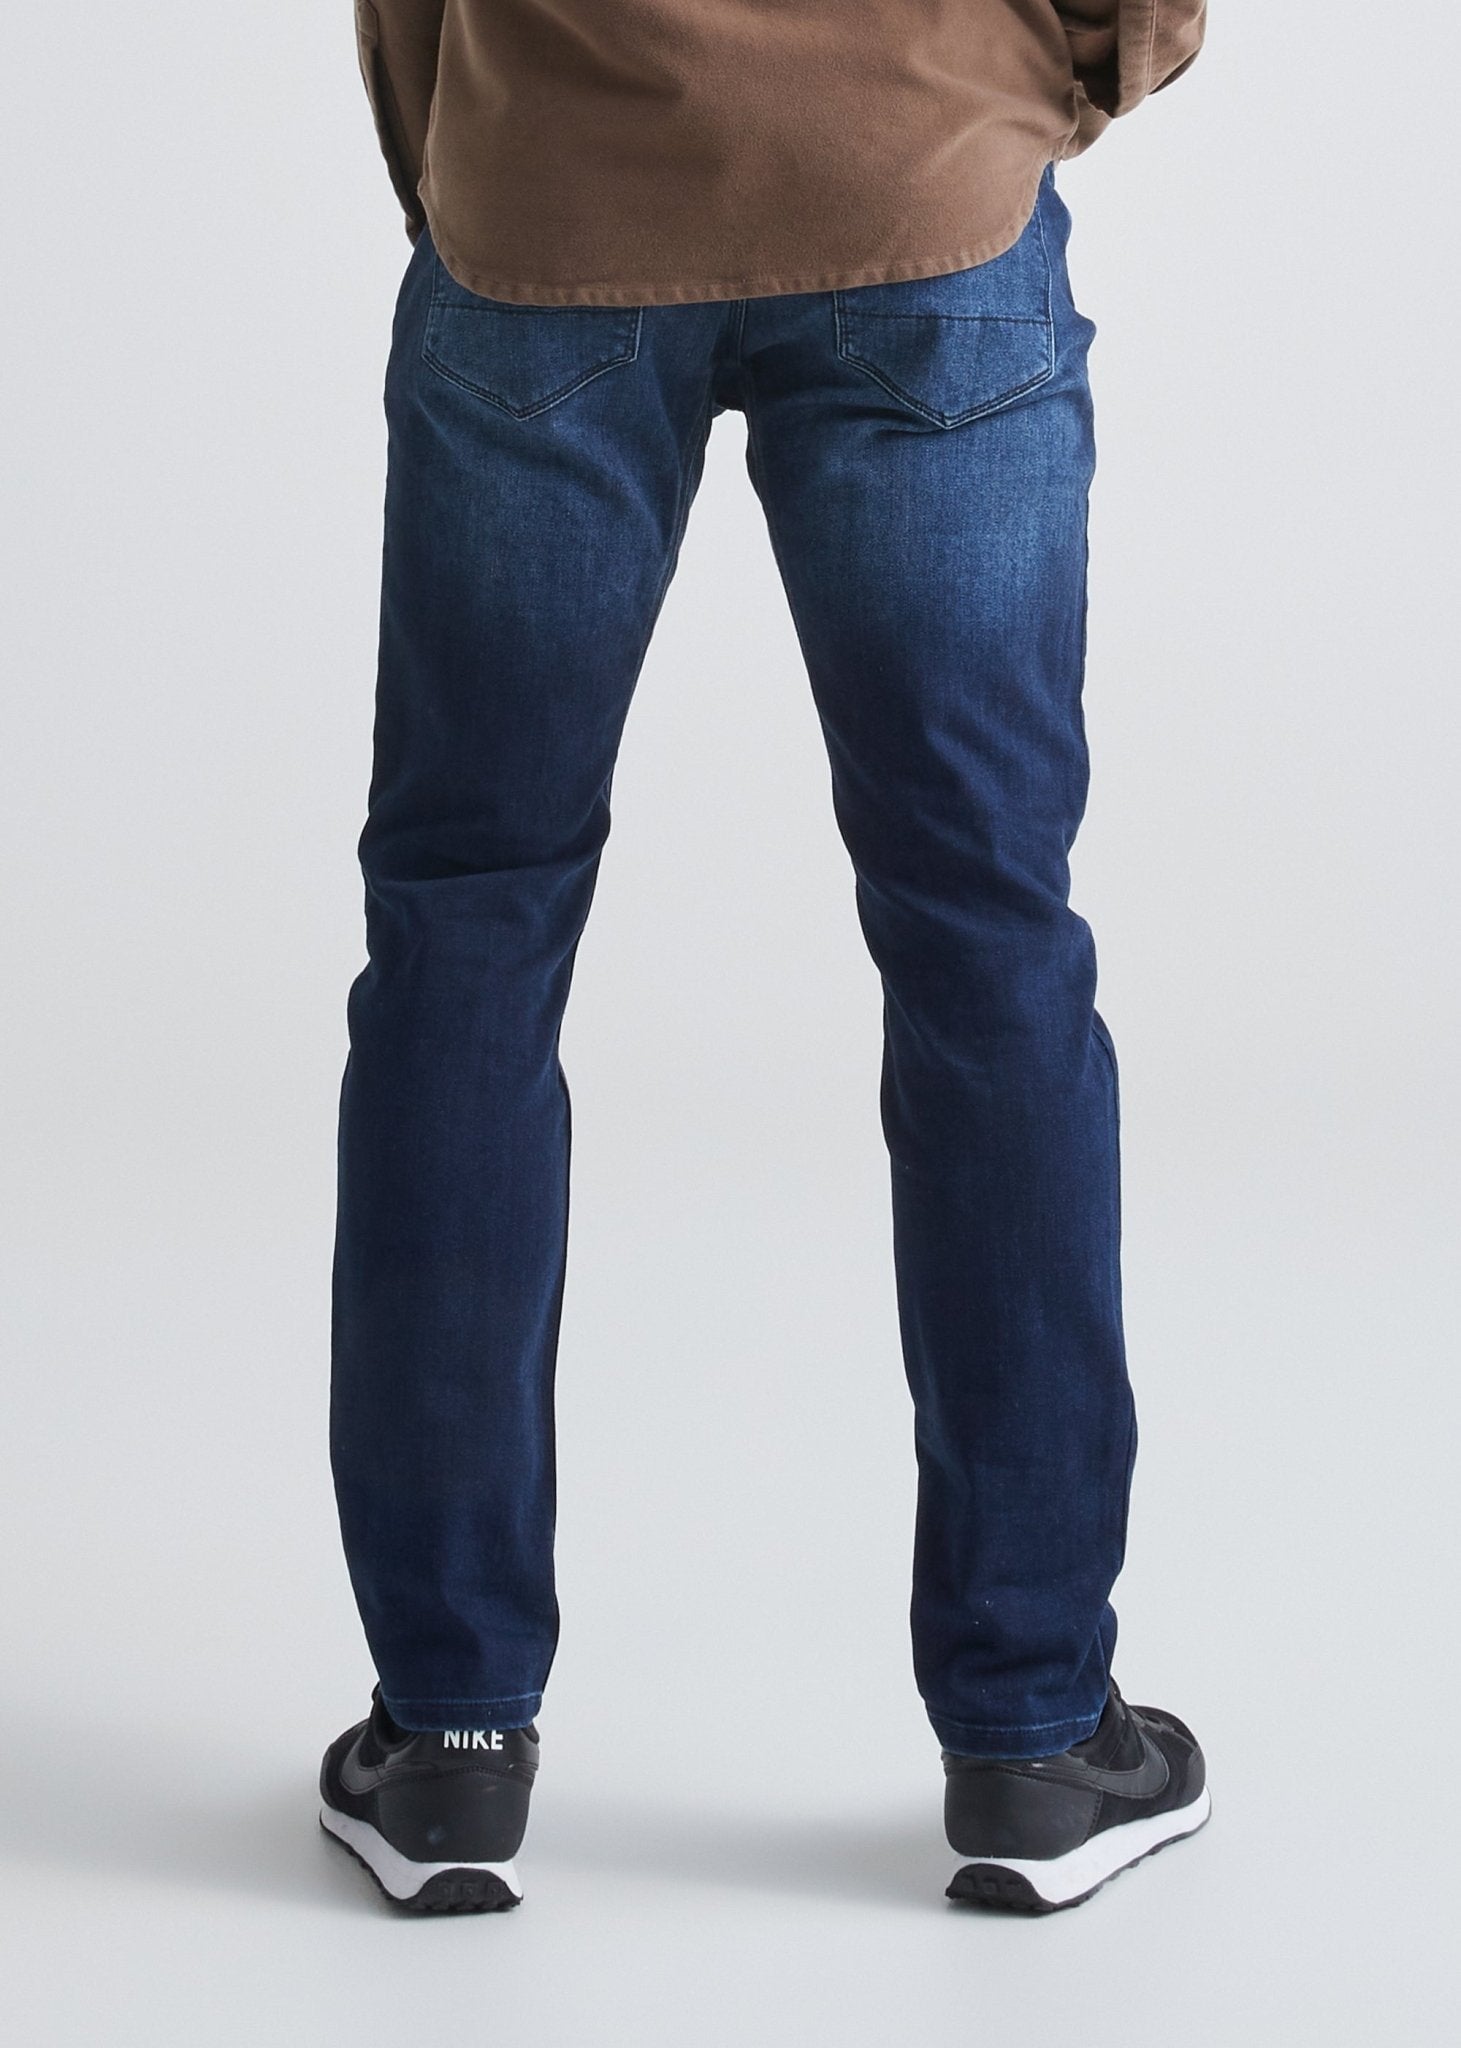 Men\'s Slim Fit Water Stretch Jeans Resistant